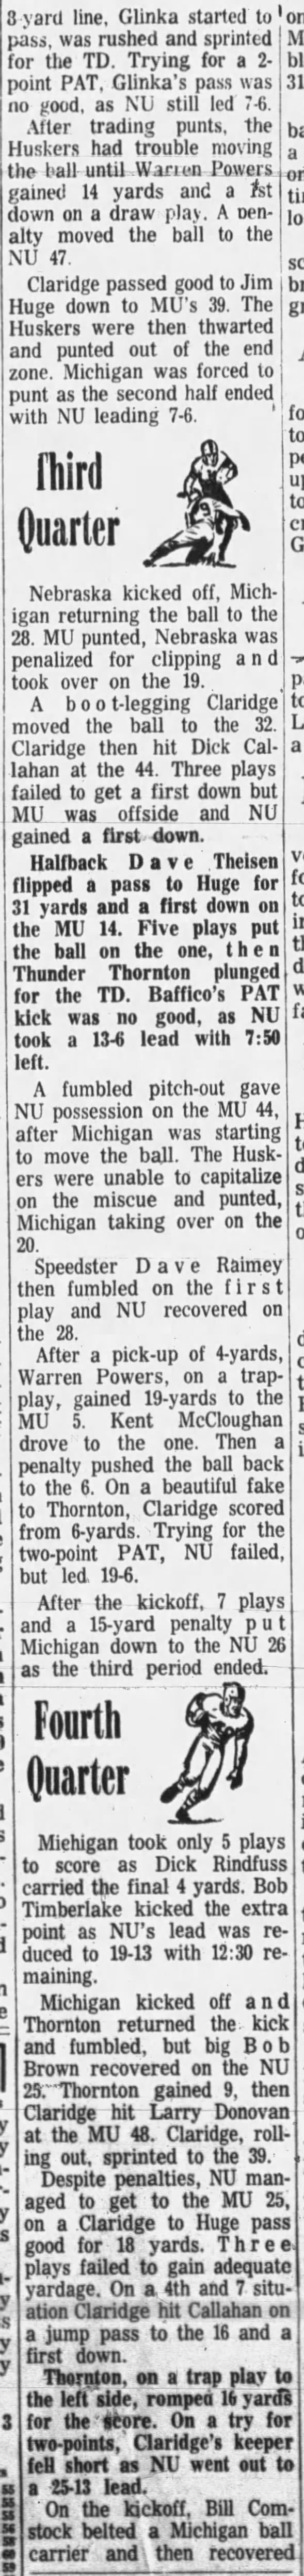 1962 Nebraska-Michigan football game summary 2/3